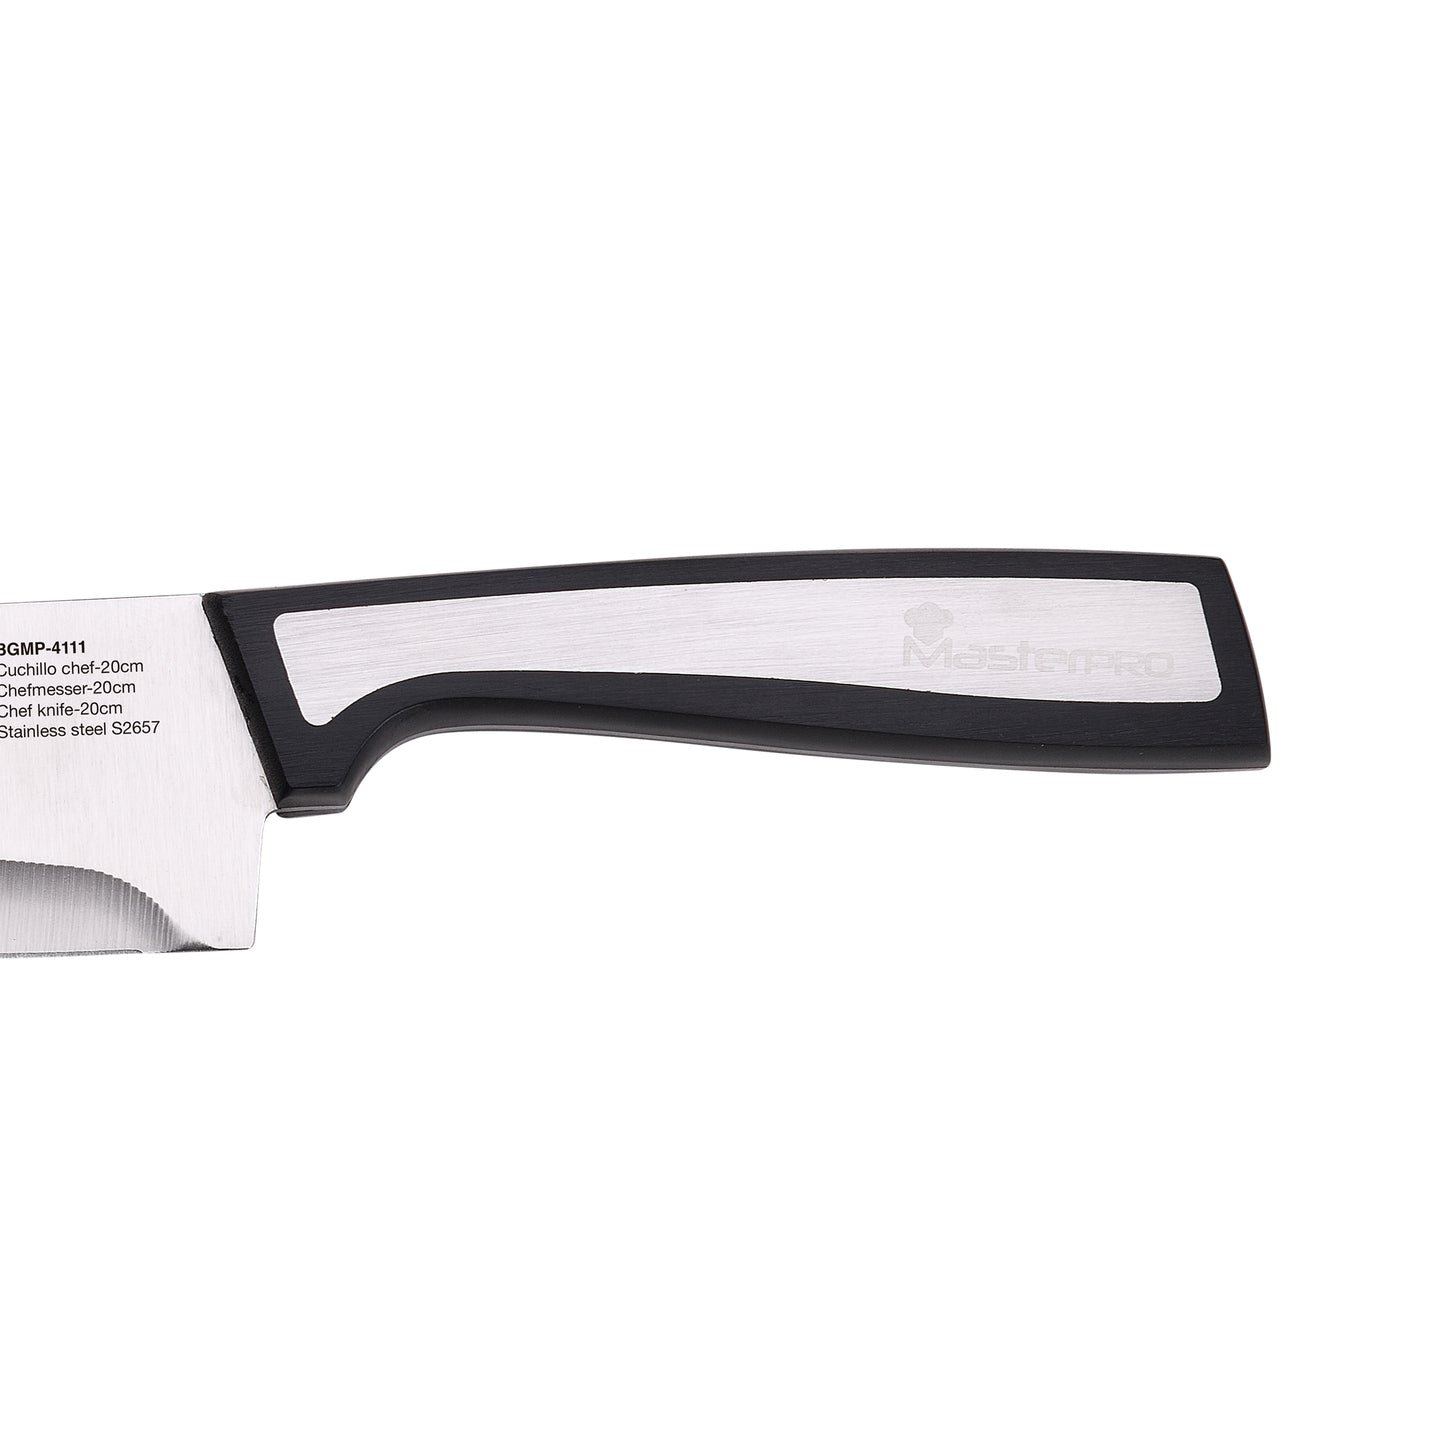 Cuchillo chef MasterPRO 20 cm - Sharp (1)